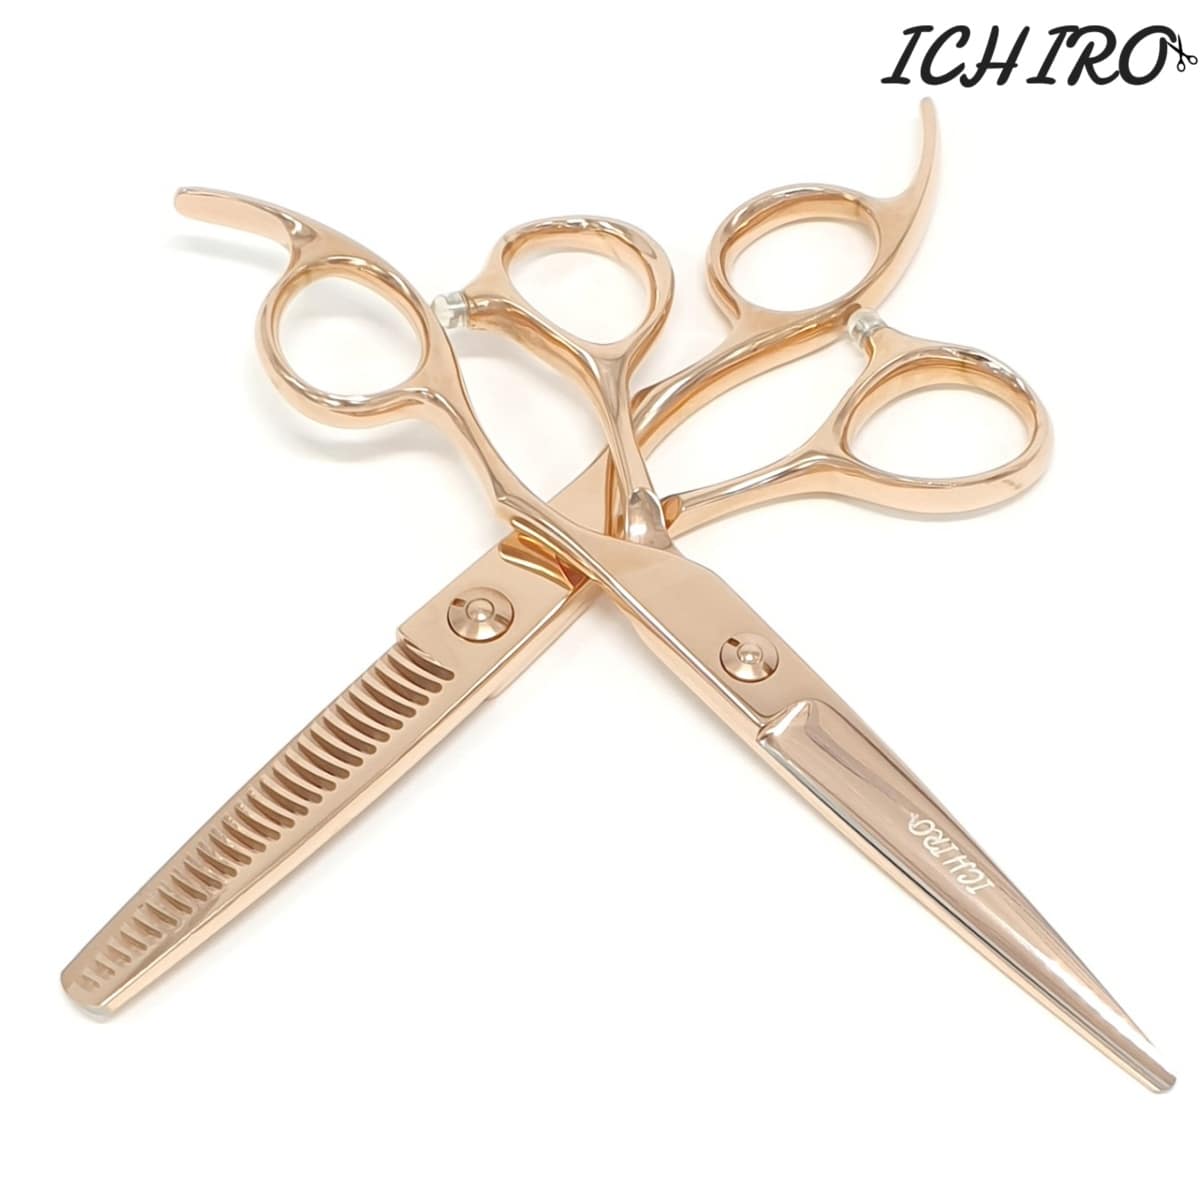 The Ichiro Rose Gold Hair Scissor Set